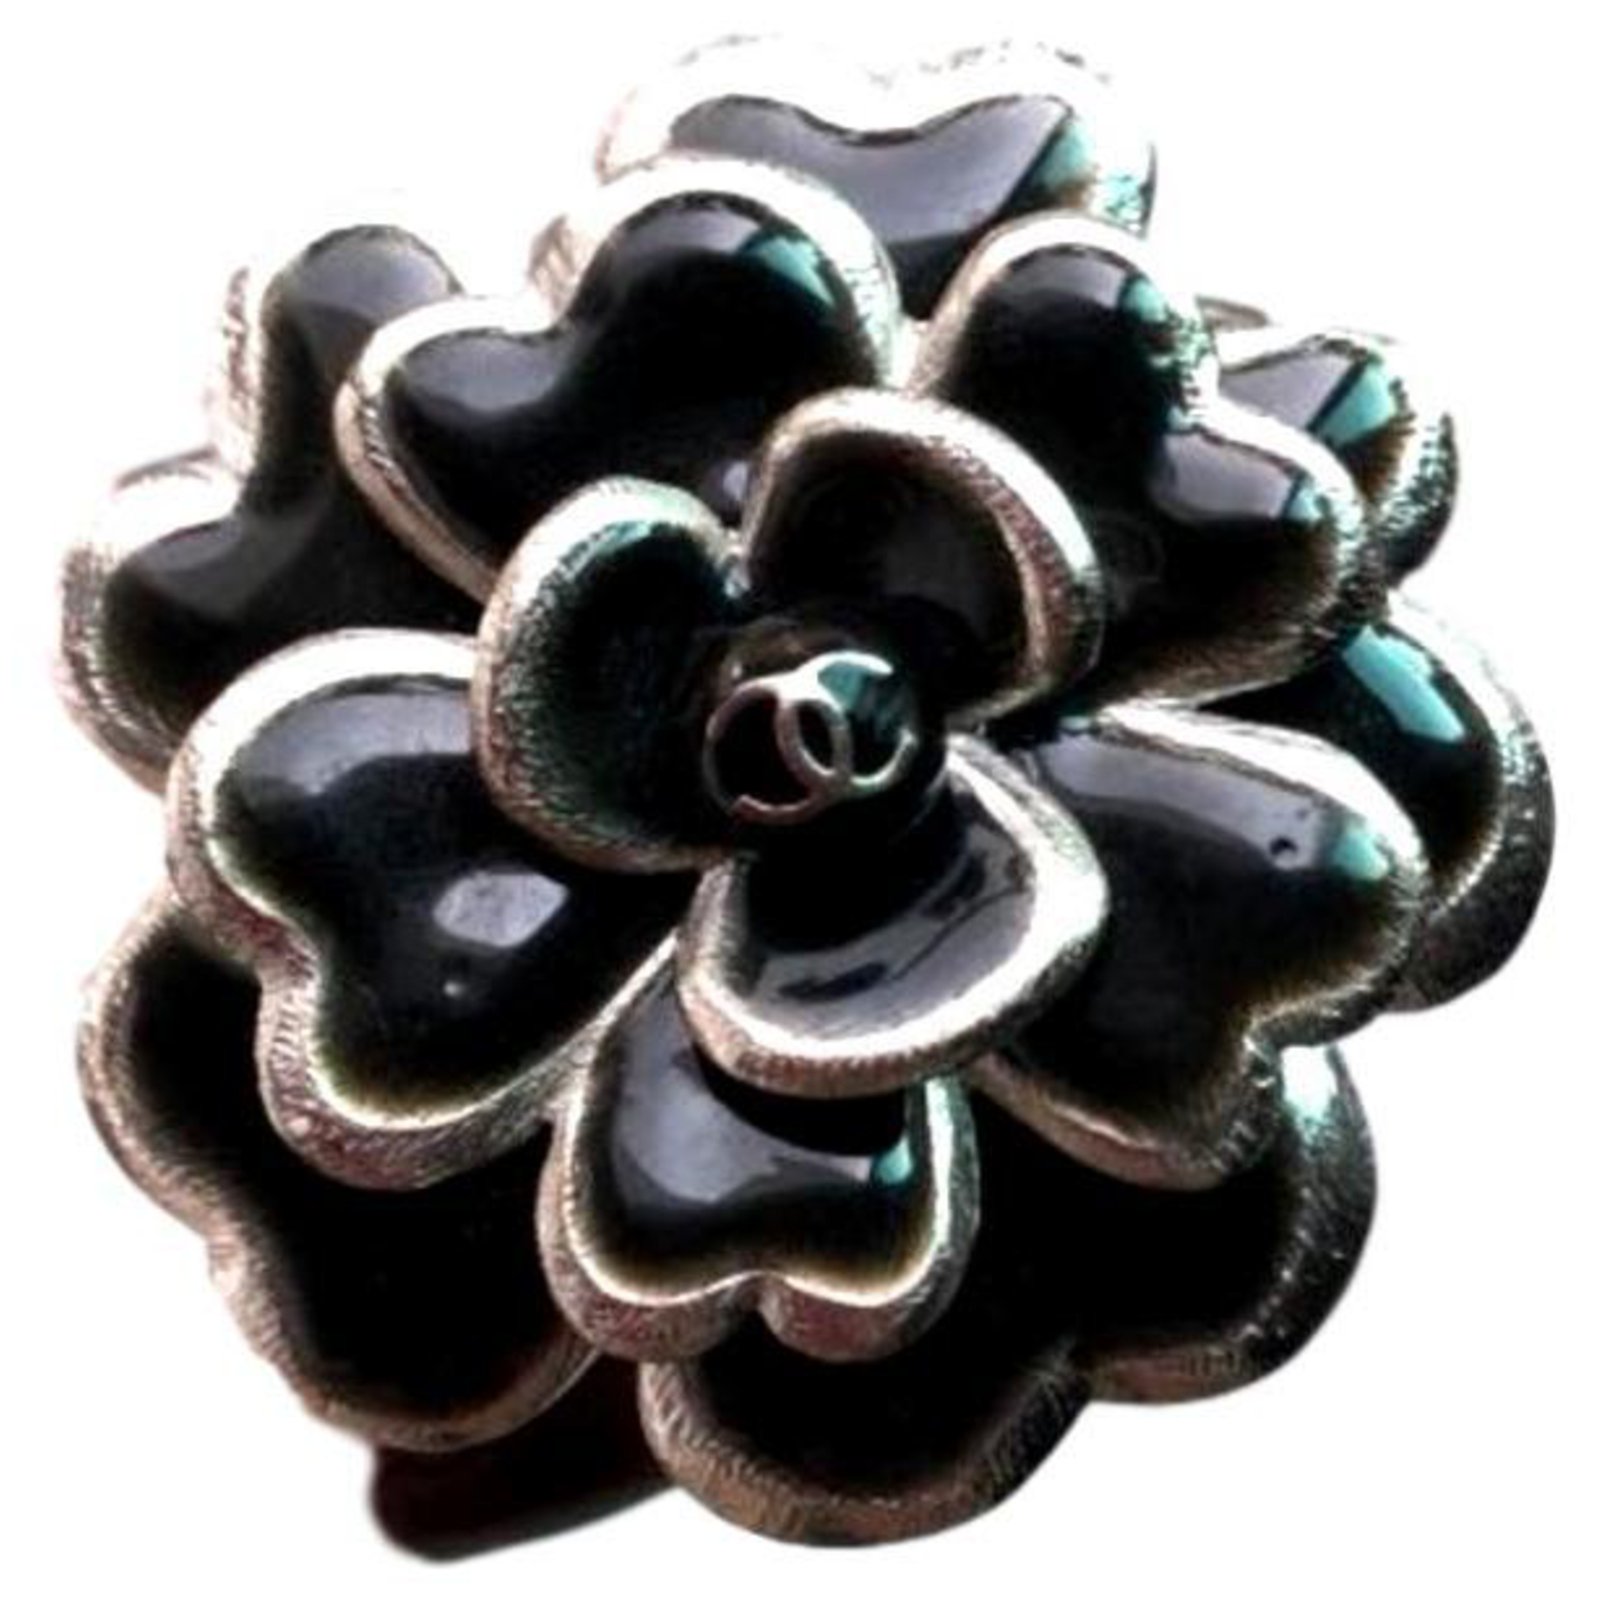 Chanel Rare Camellia Cage Cuff Bracelet - Vintage Lux